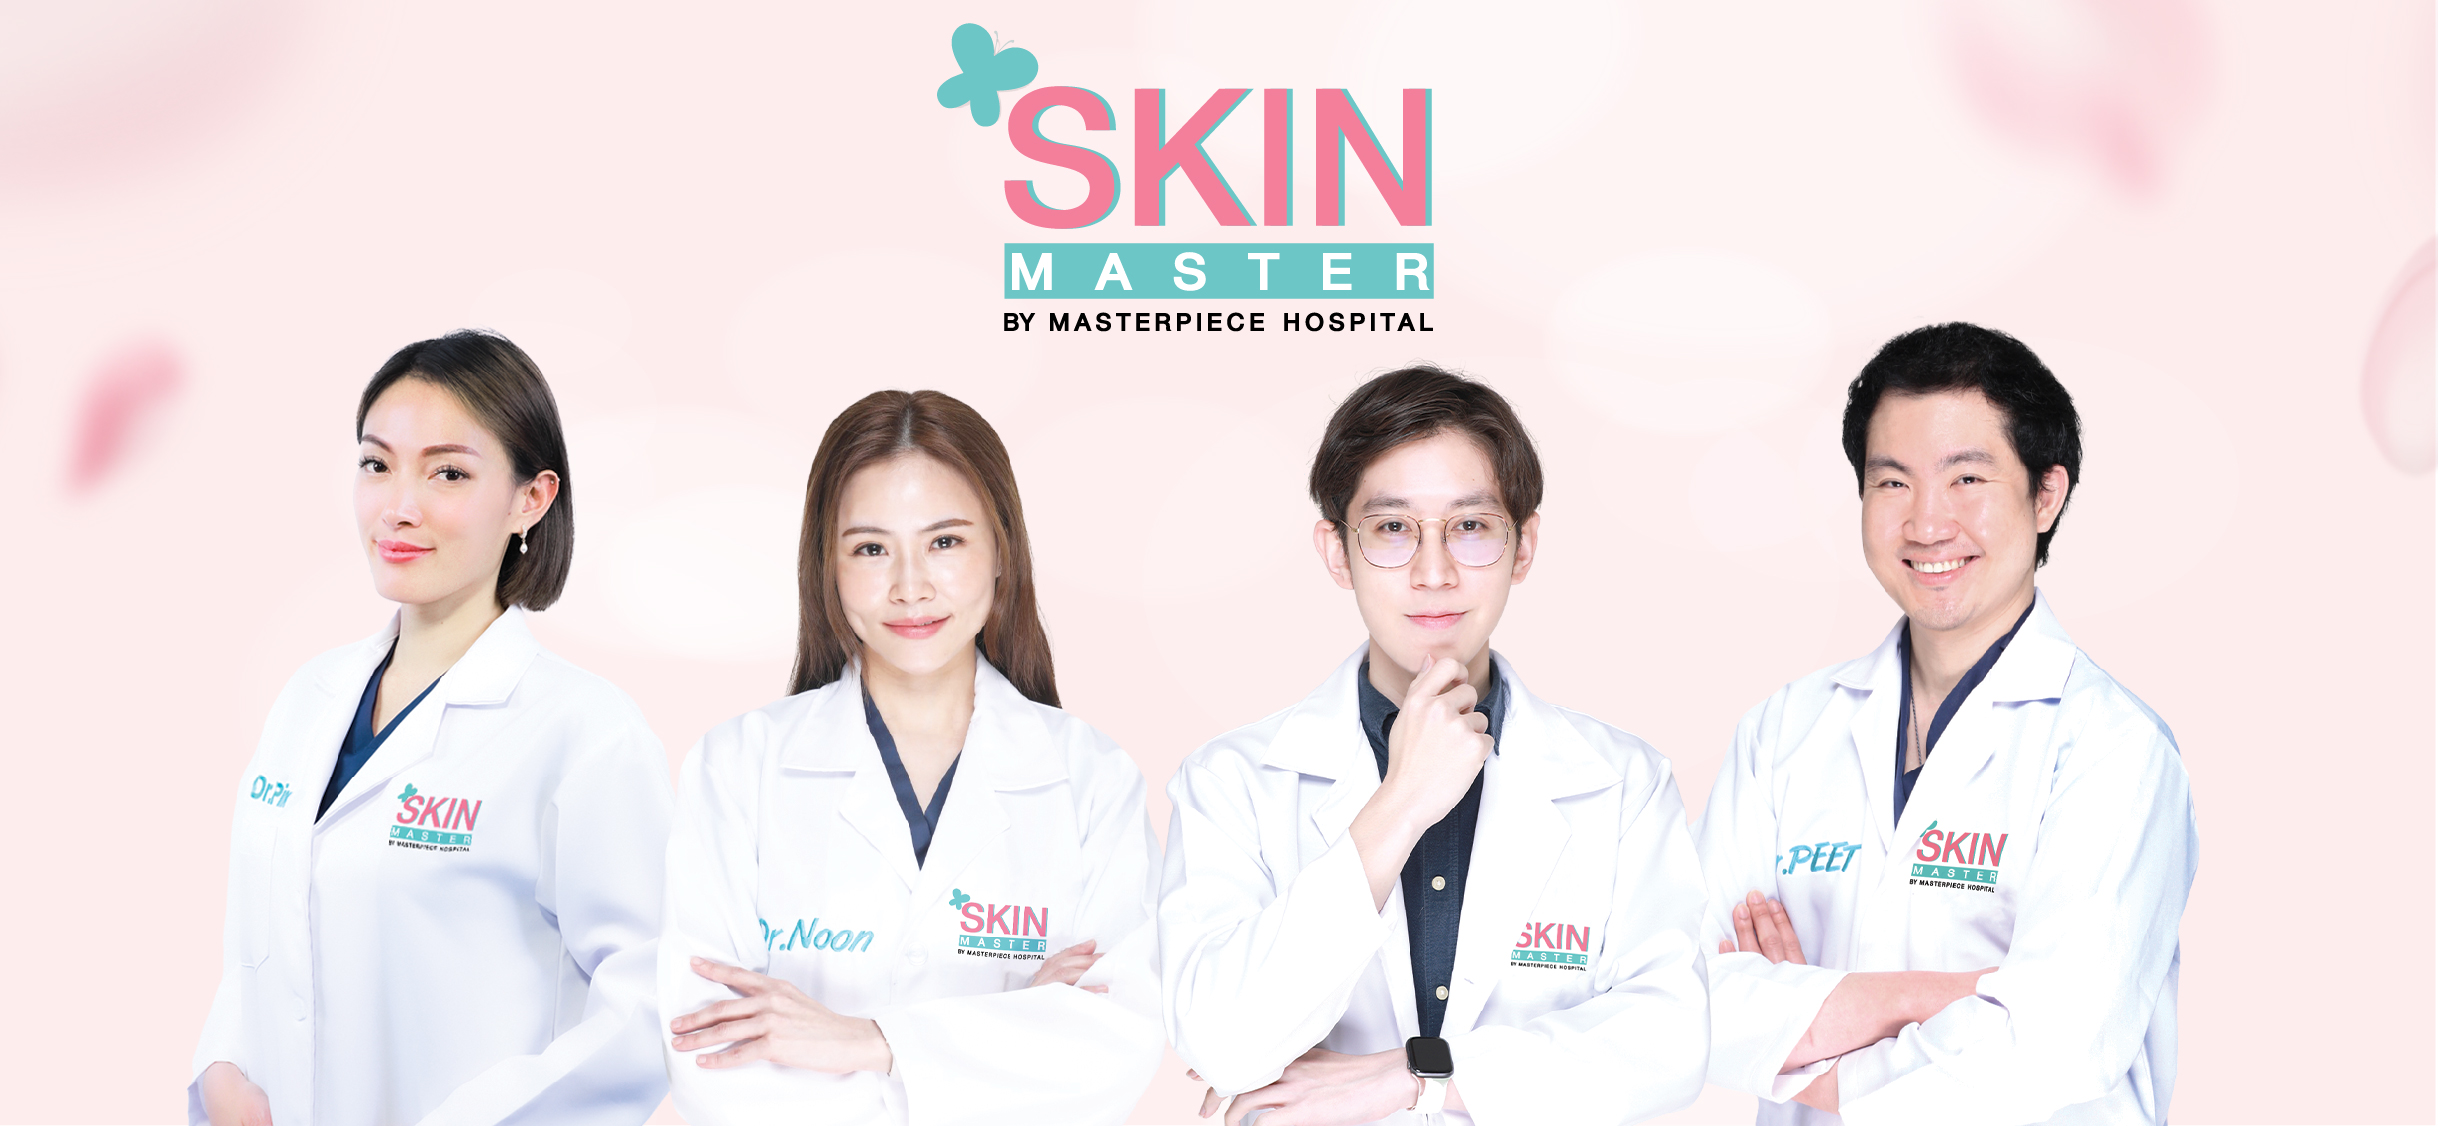 Skin master by masterpiece hospital